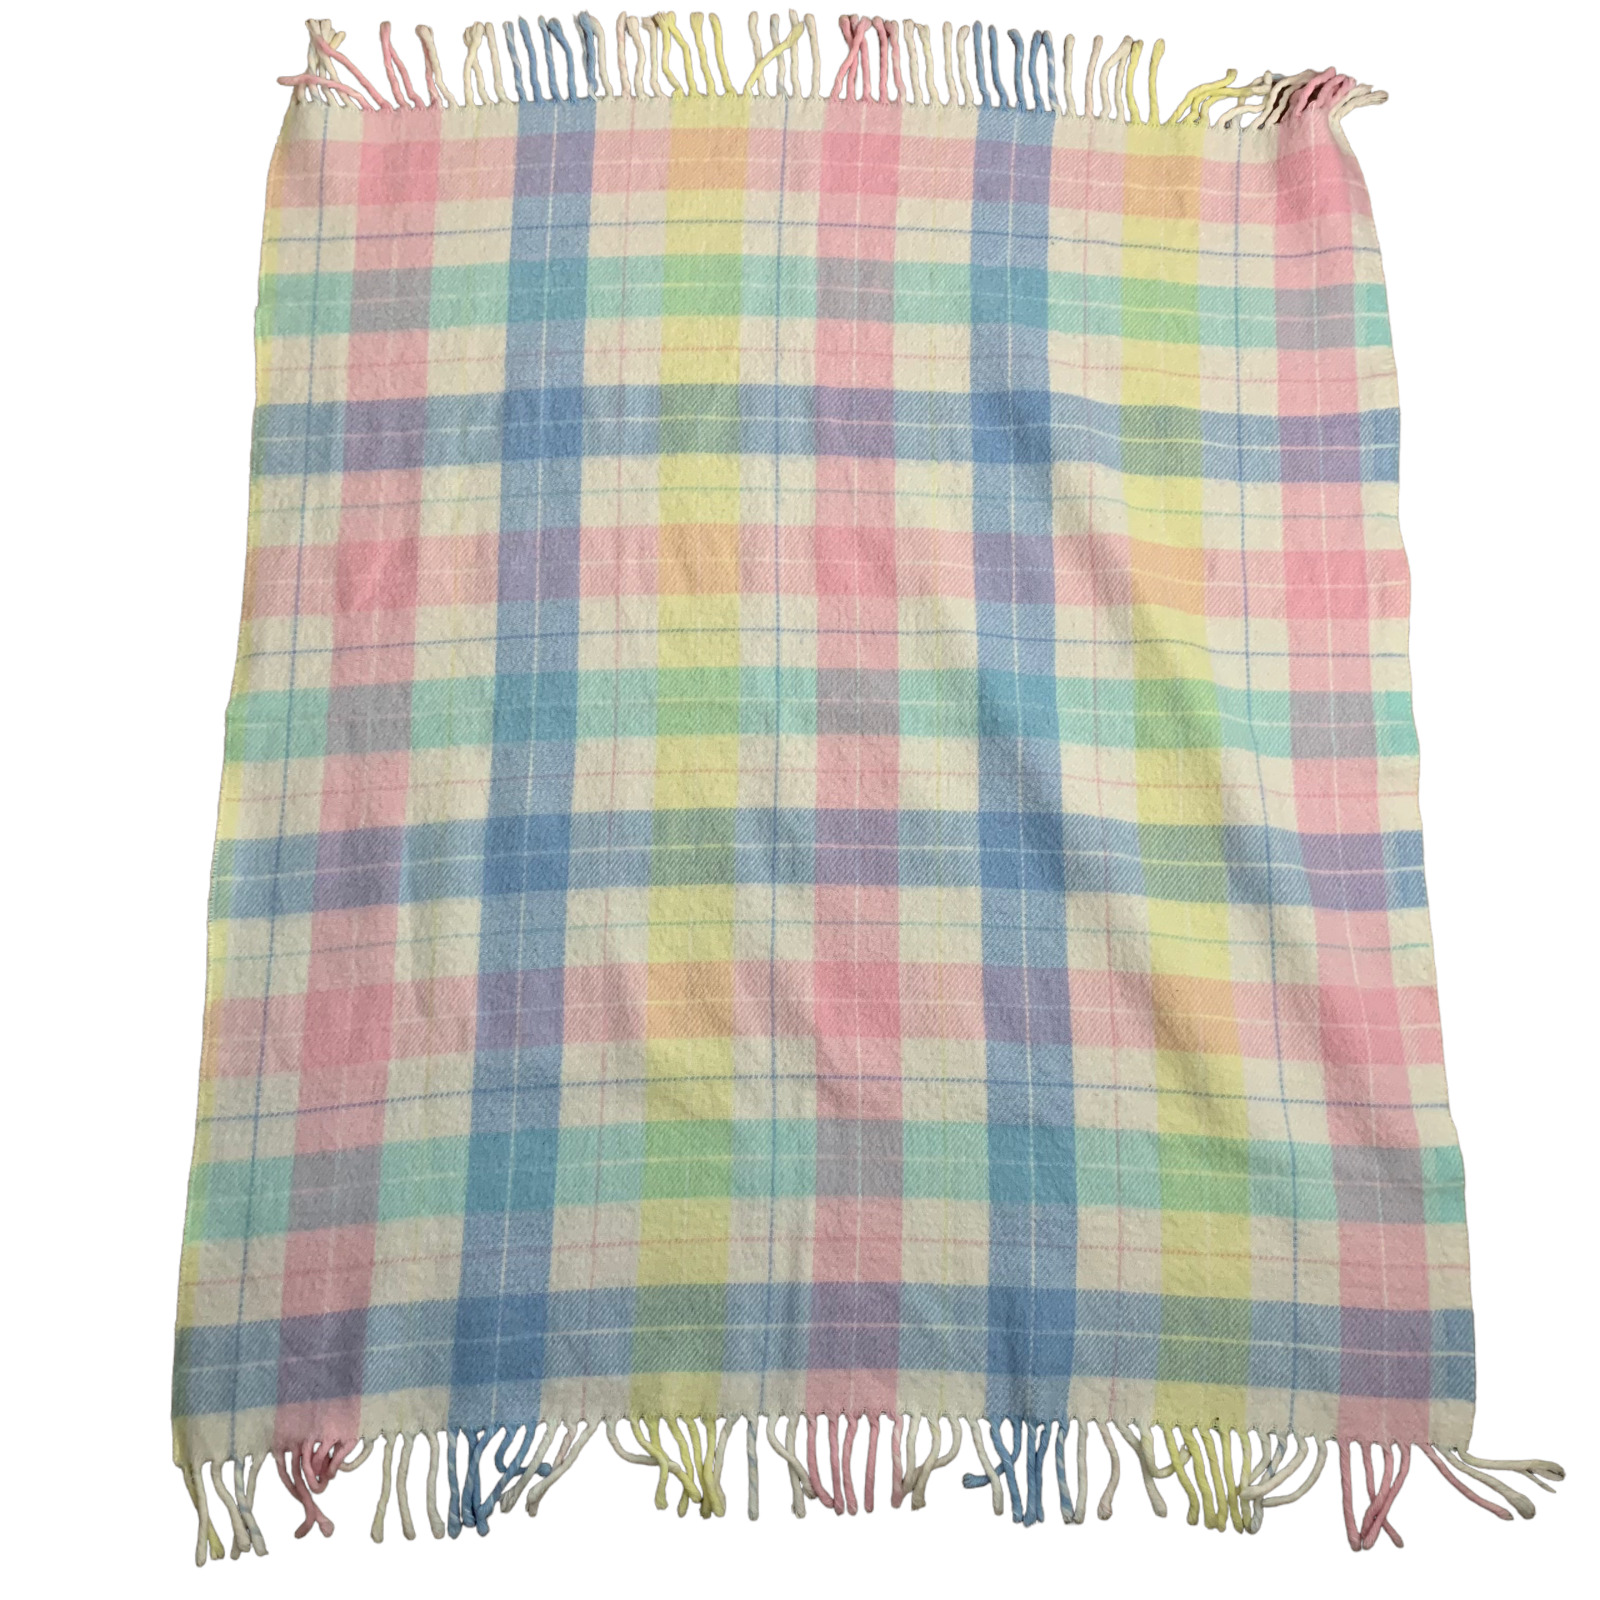 Vintage Knit Baby Lap Blanket Throw 40 x 36 Blue Pink Plaid Fringe Deadstock USA